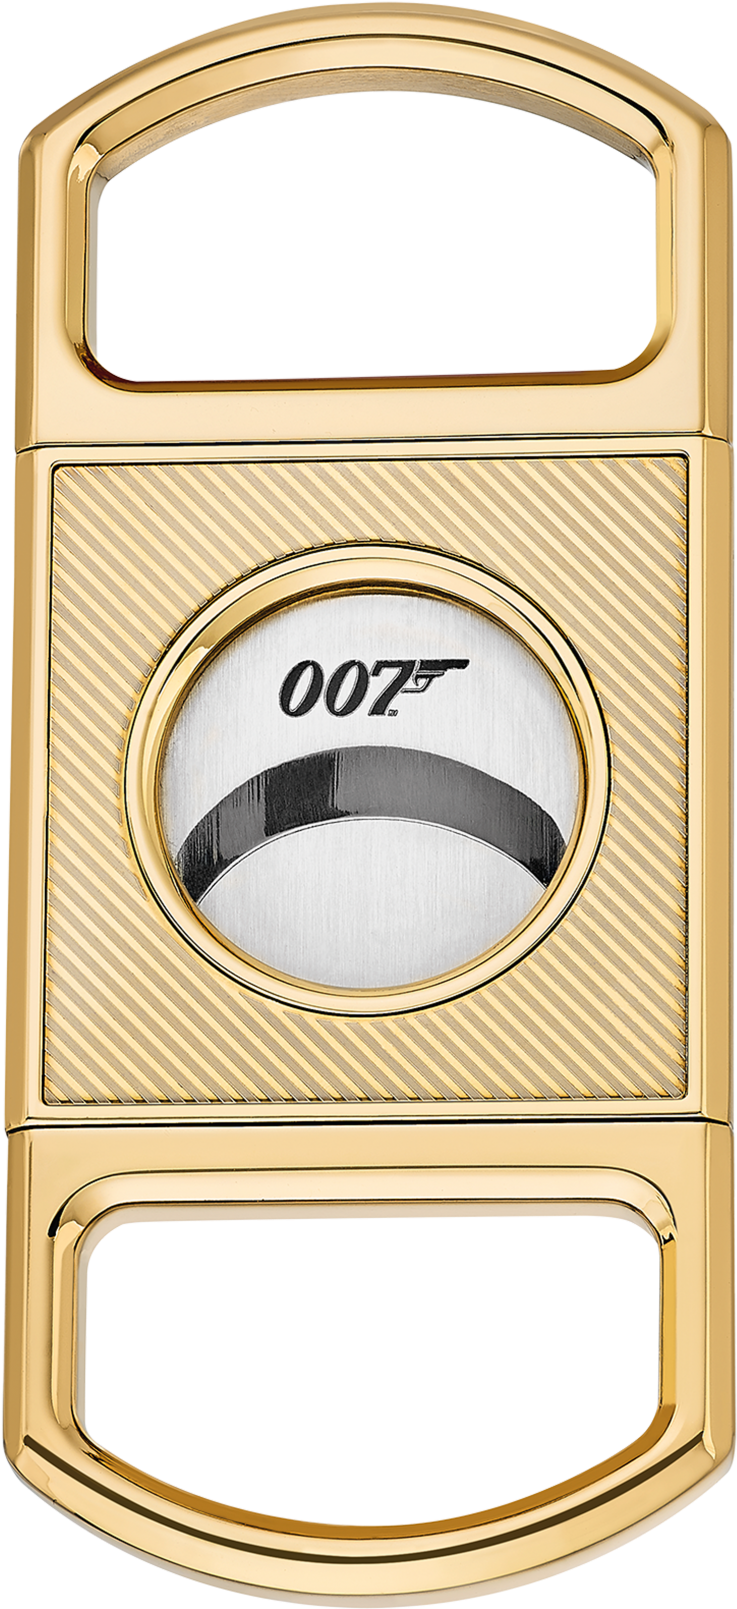 Cigar Cutter James Bond 007 Gold - Cigars (400x400), Png Download